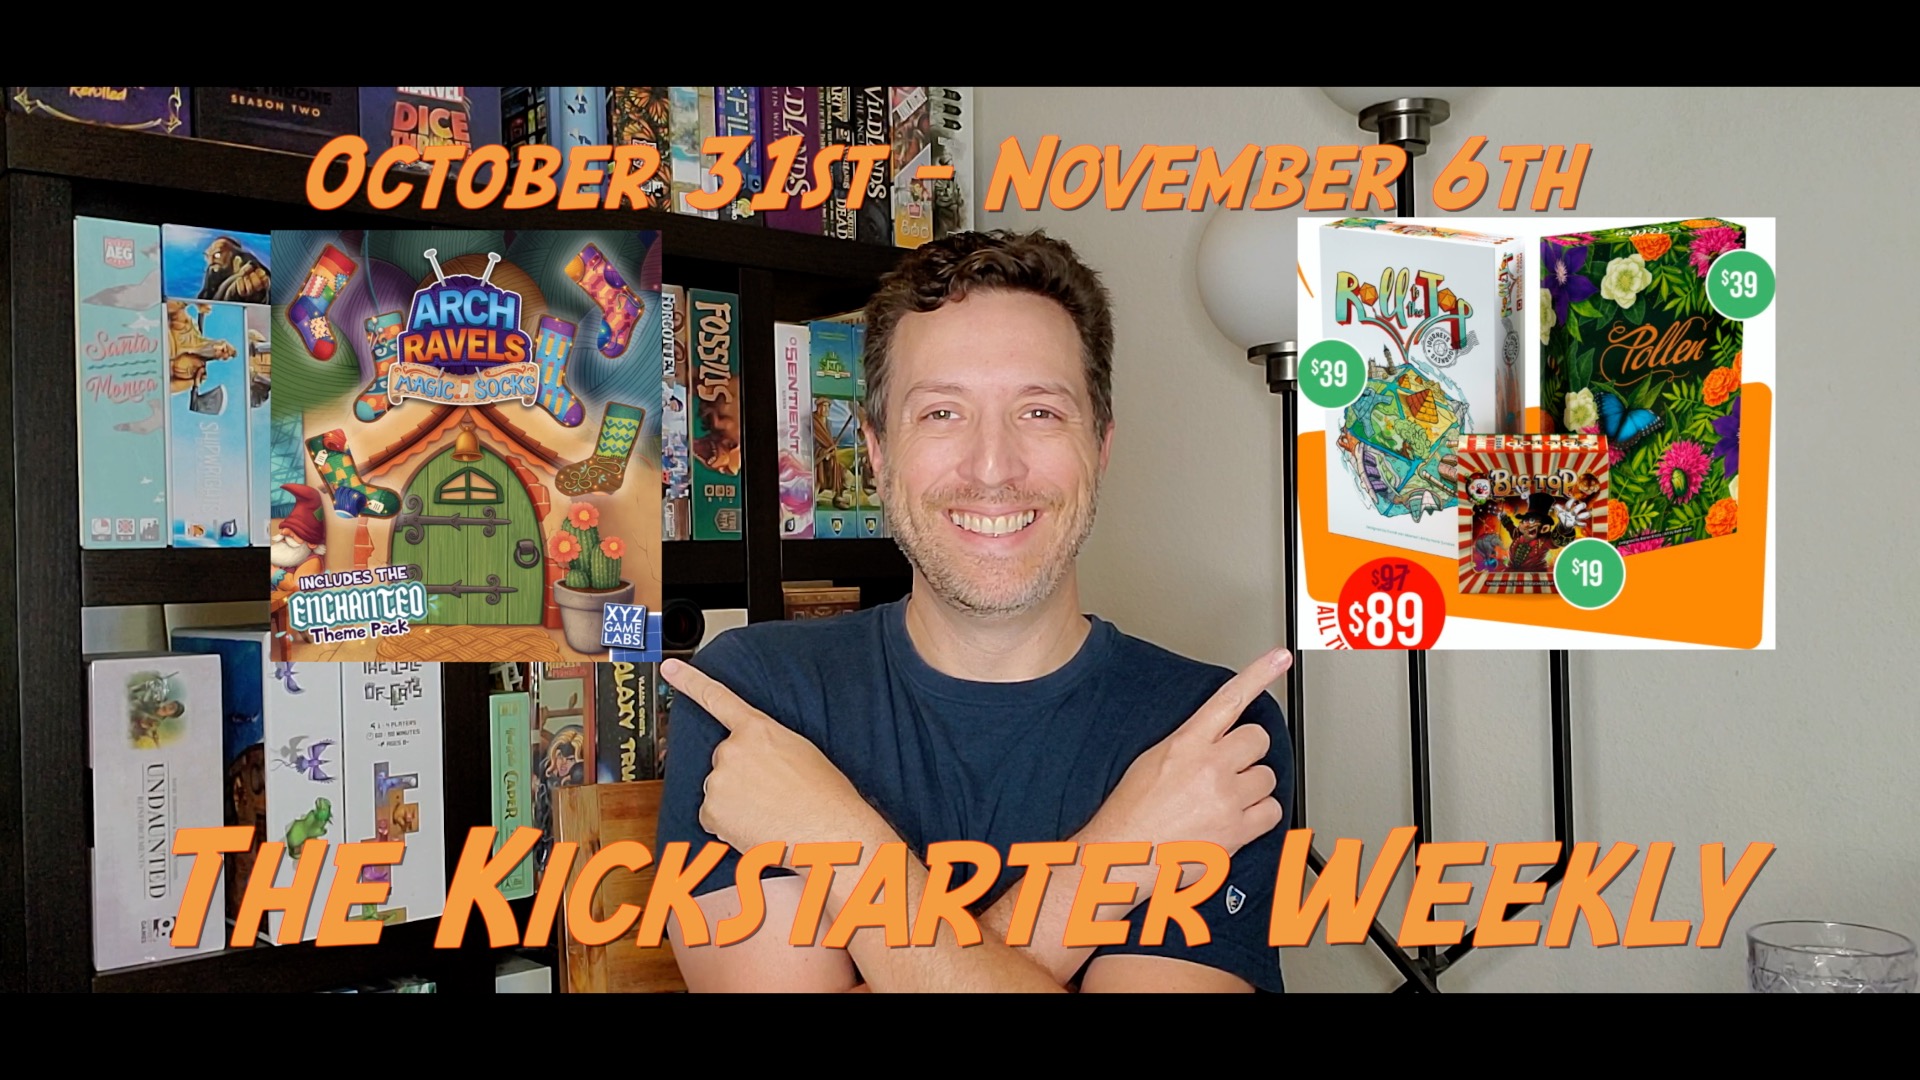 The Kickstarter Weekly, October 31st – November 6th